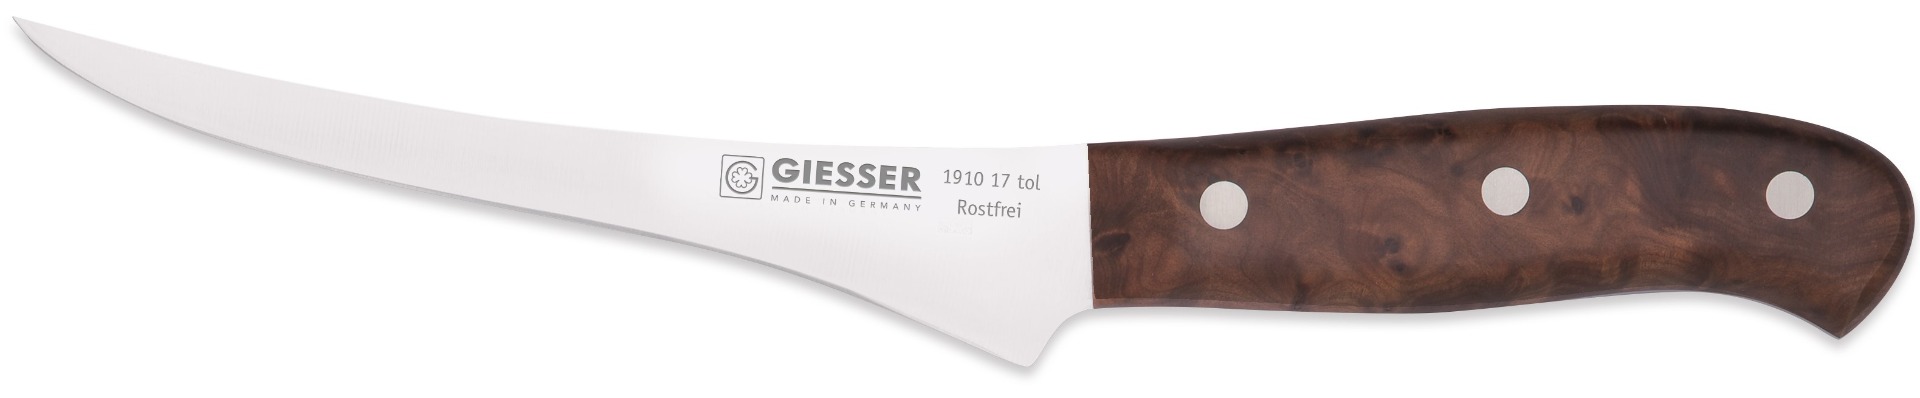 Giesser Messer - Premiumcut Filet No.1 Tol